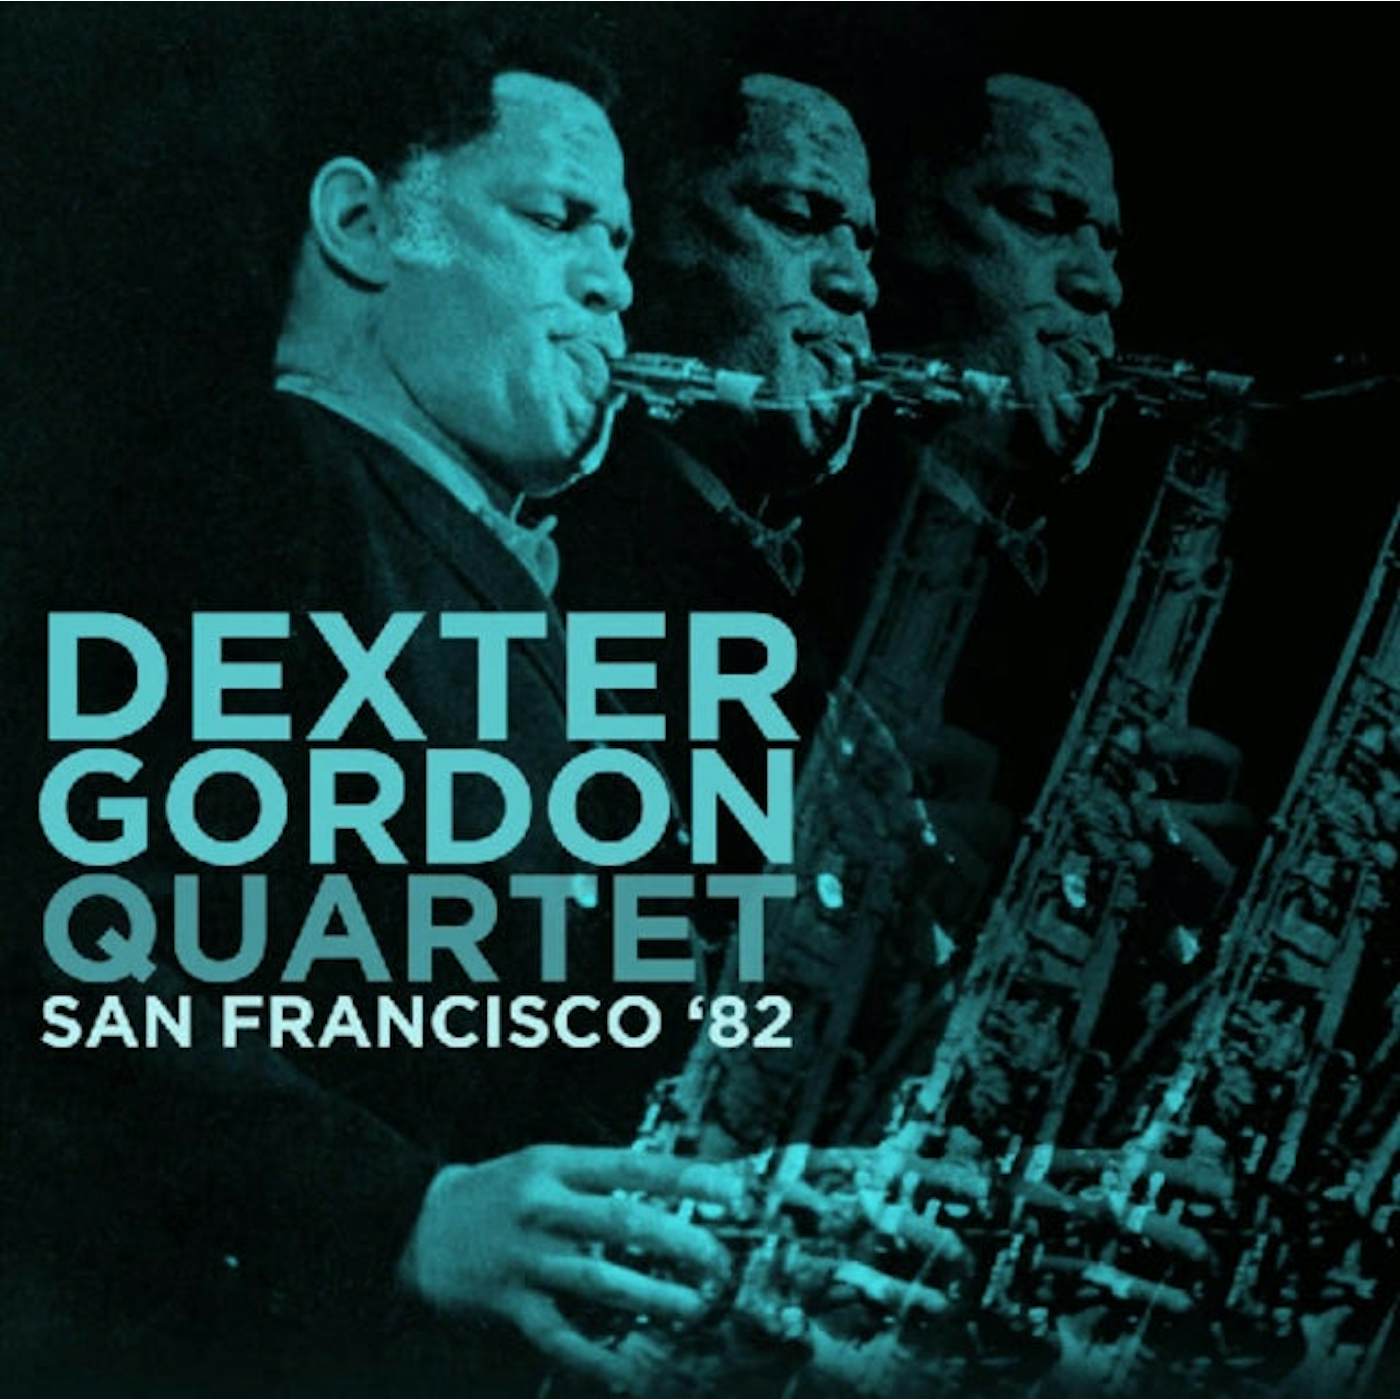 Dexter Gordon Quartet CD - San Francisco '82